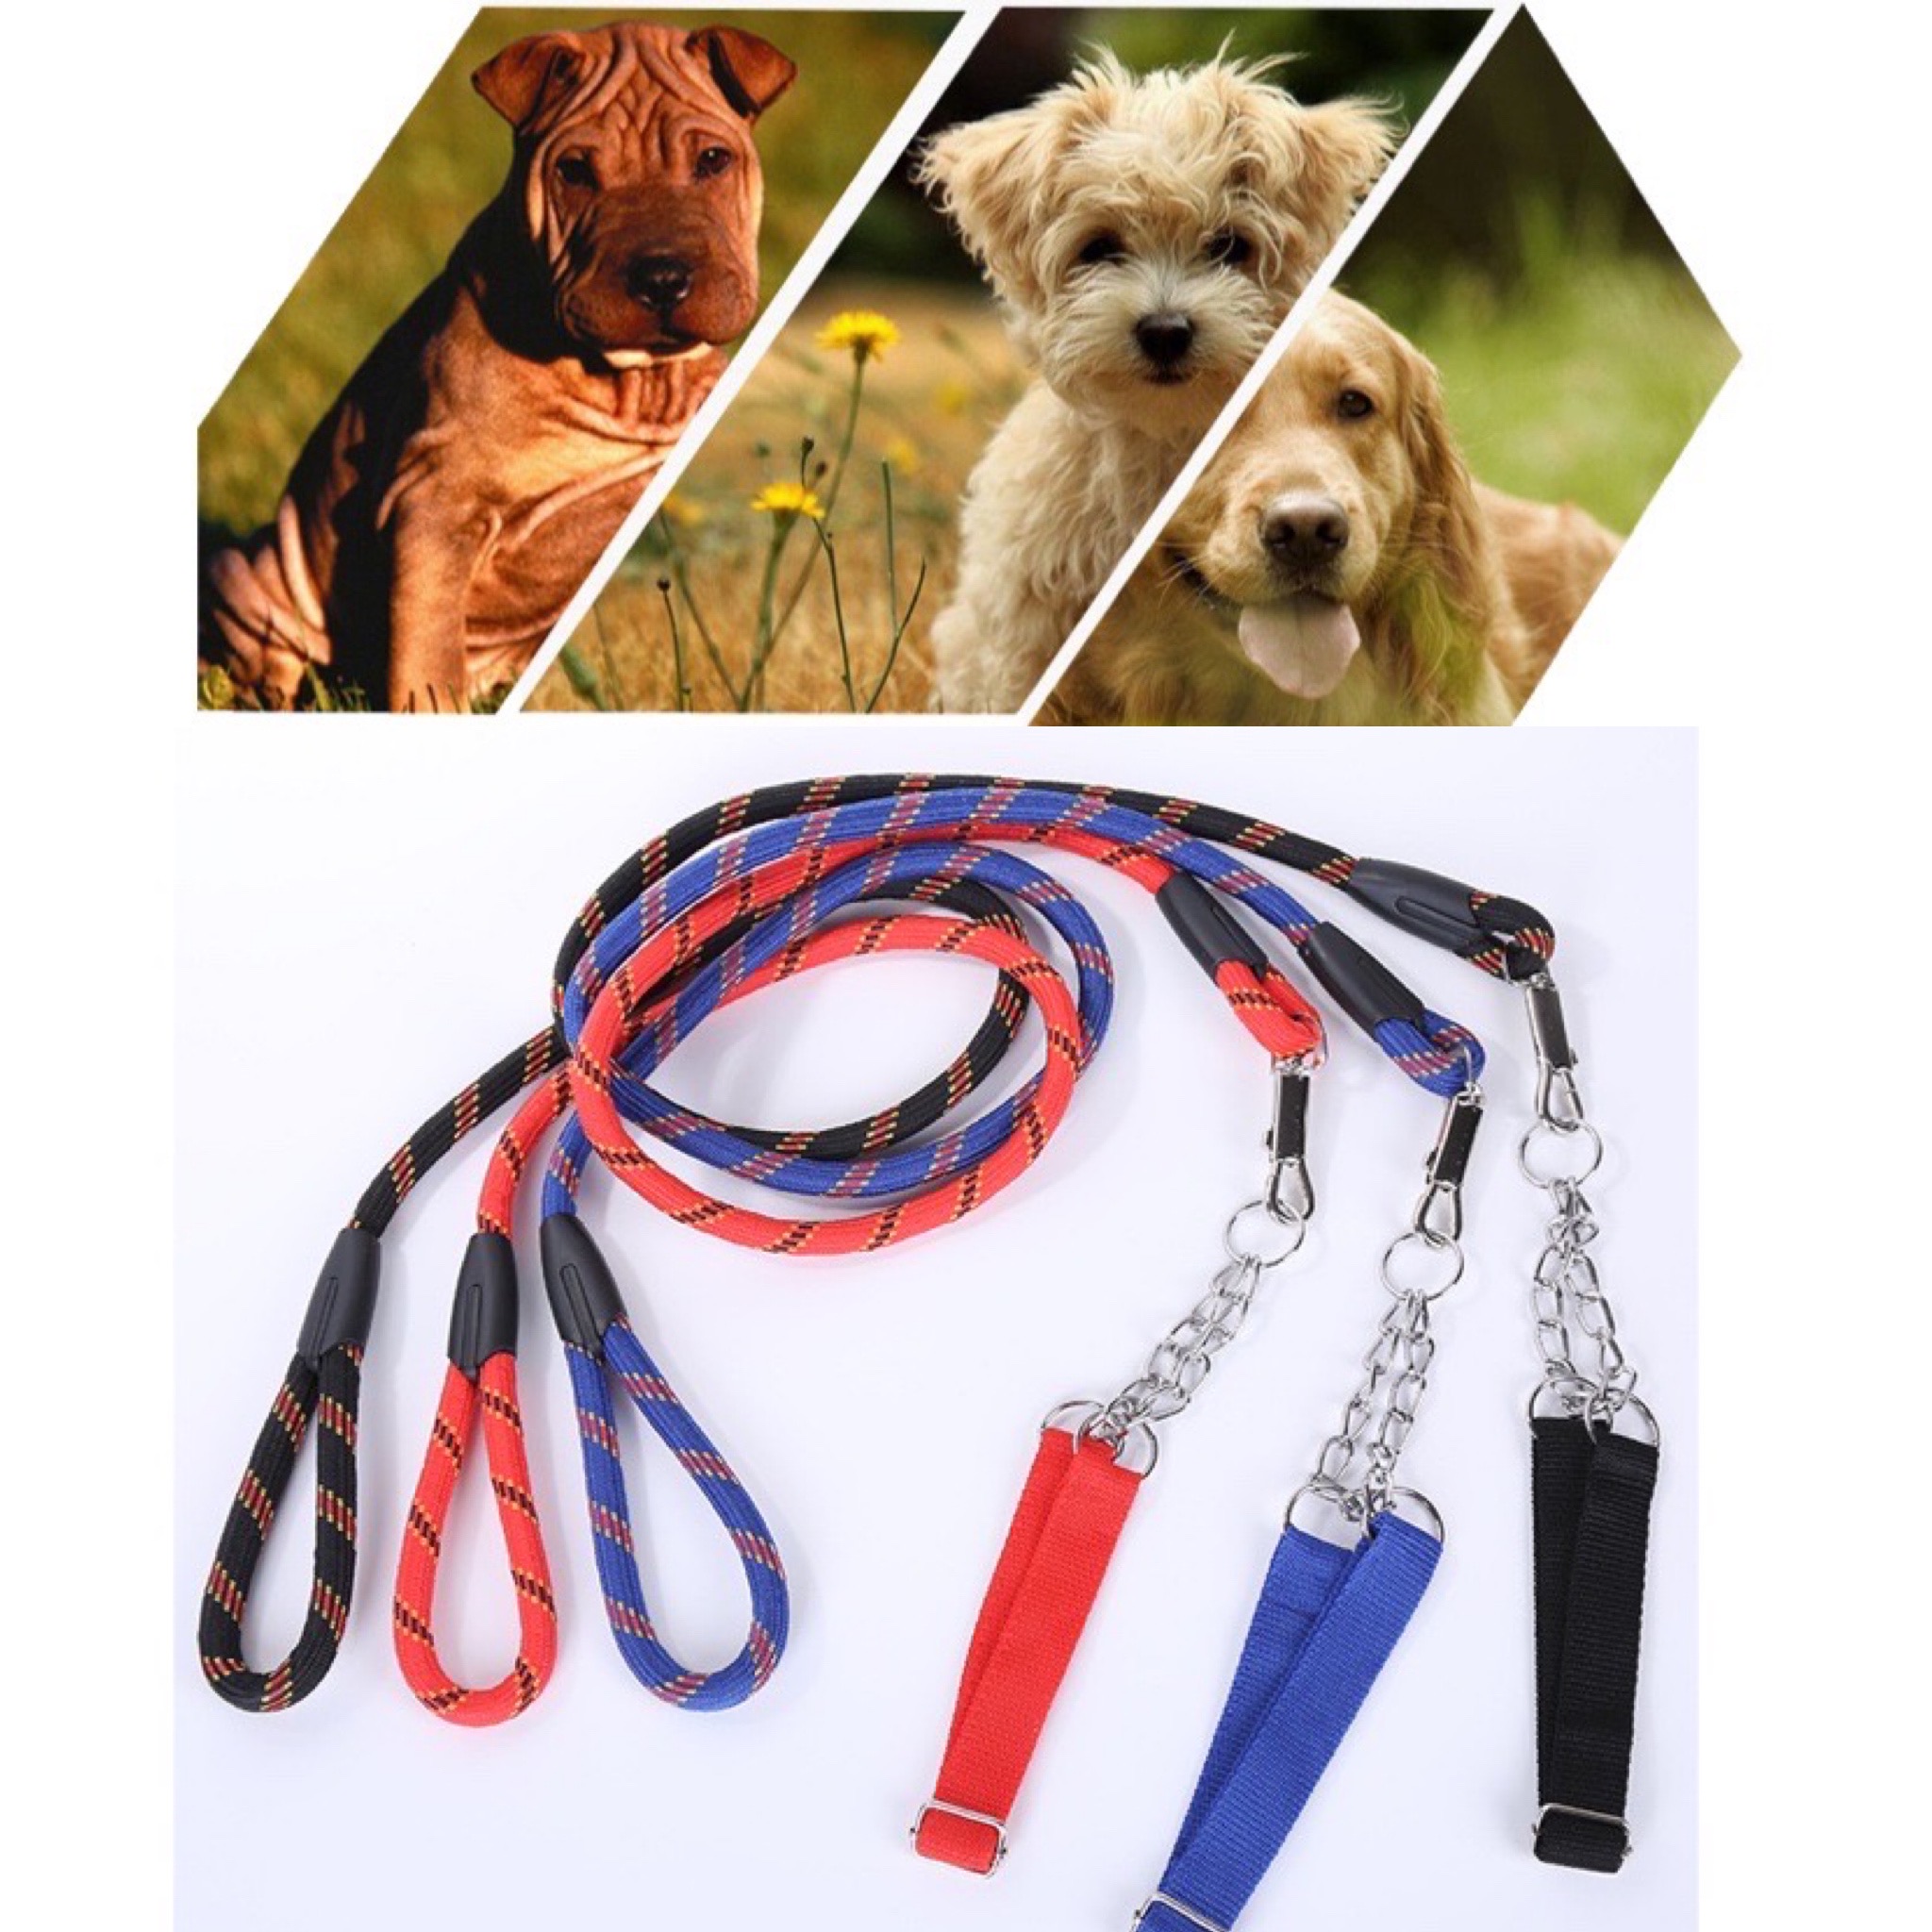 Stretchable Puppy Dog Leash Harness dog 